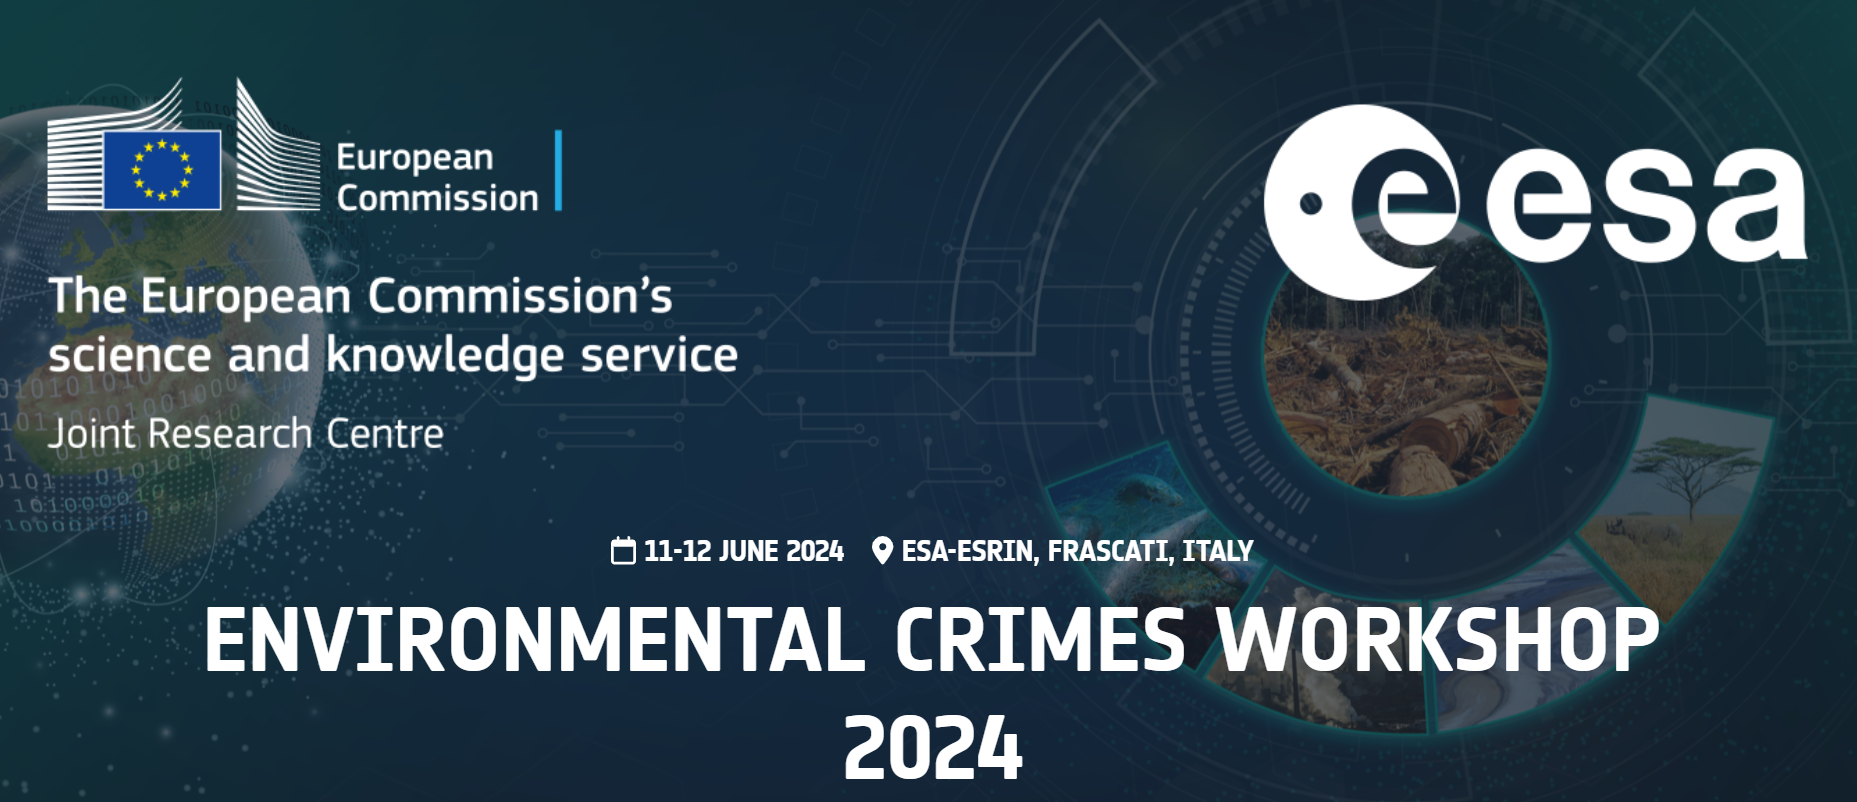 Environmental Crimes Workshop 2024